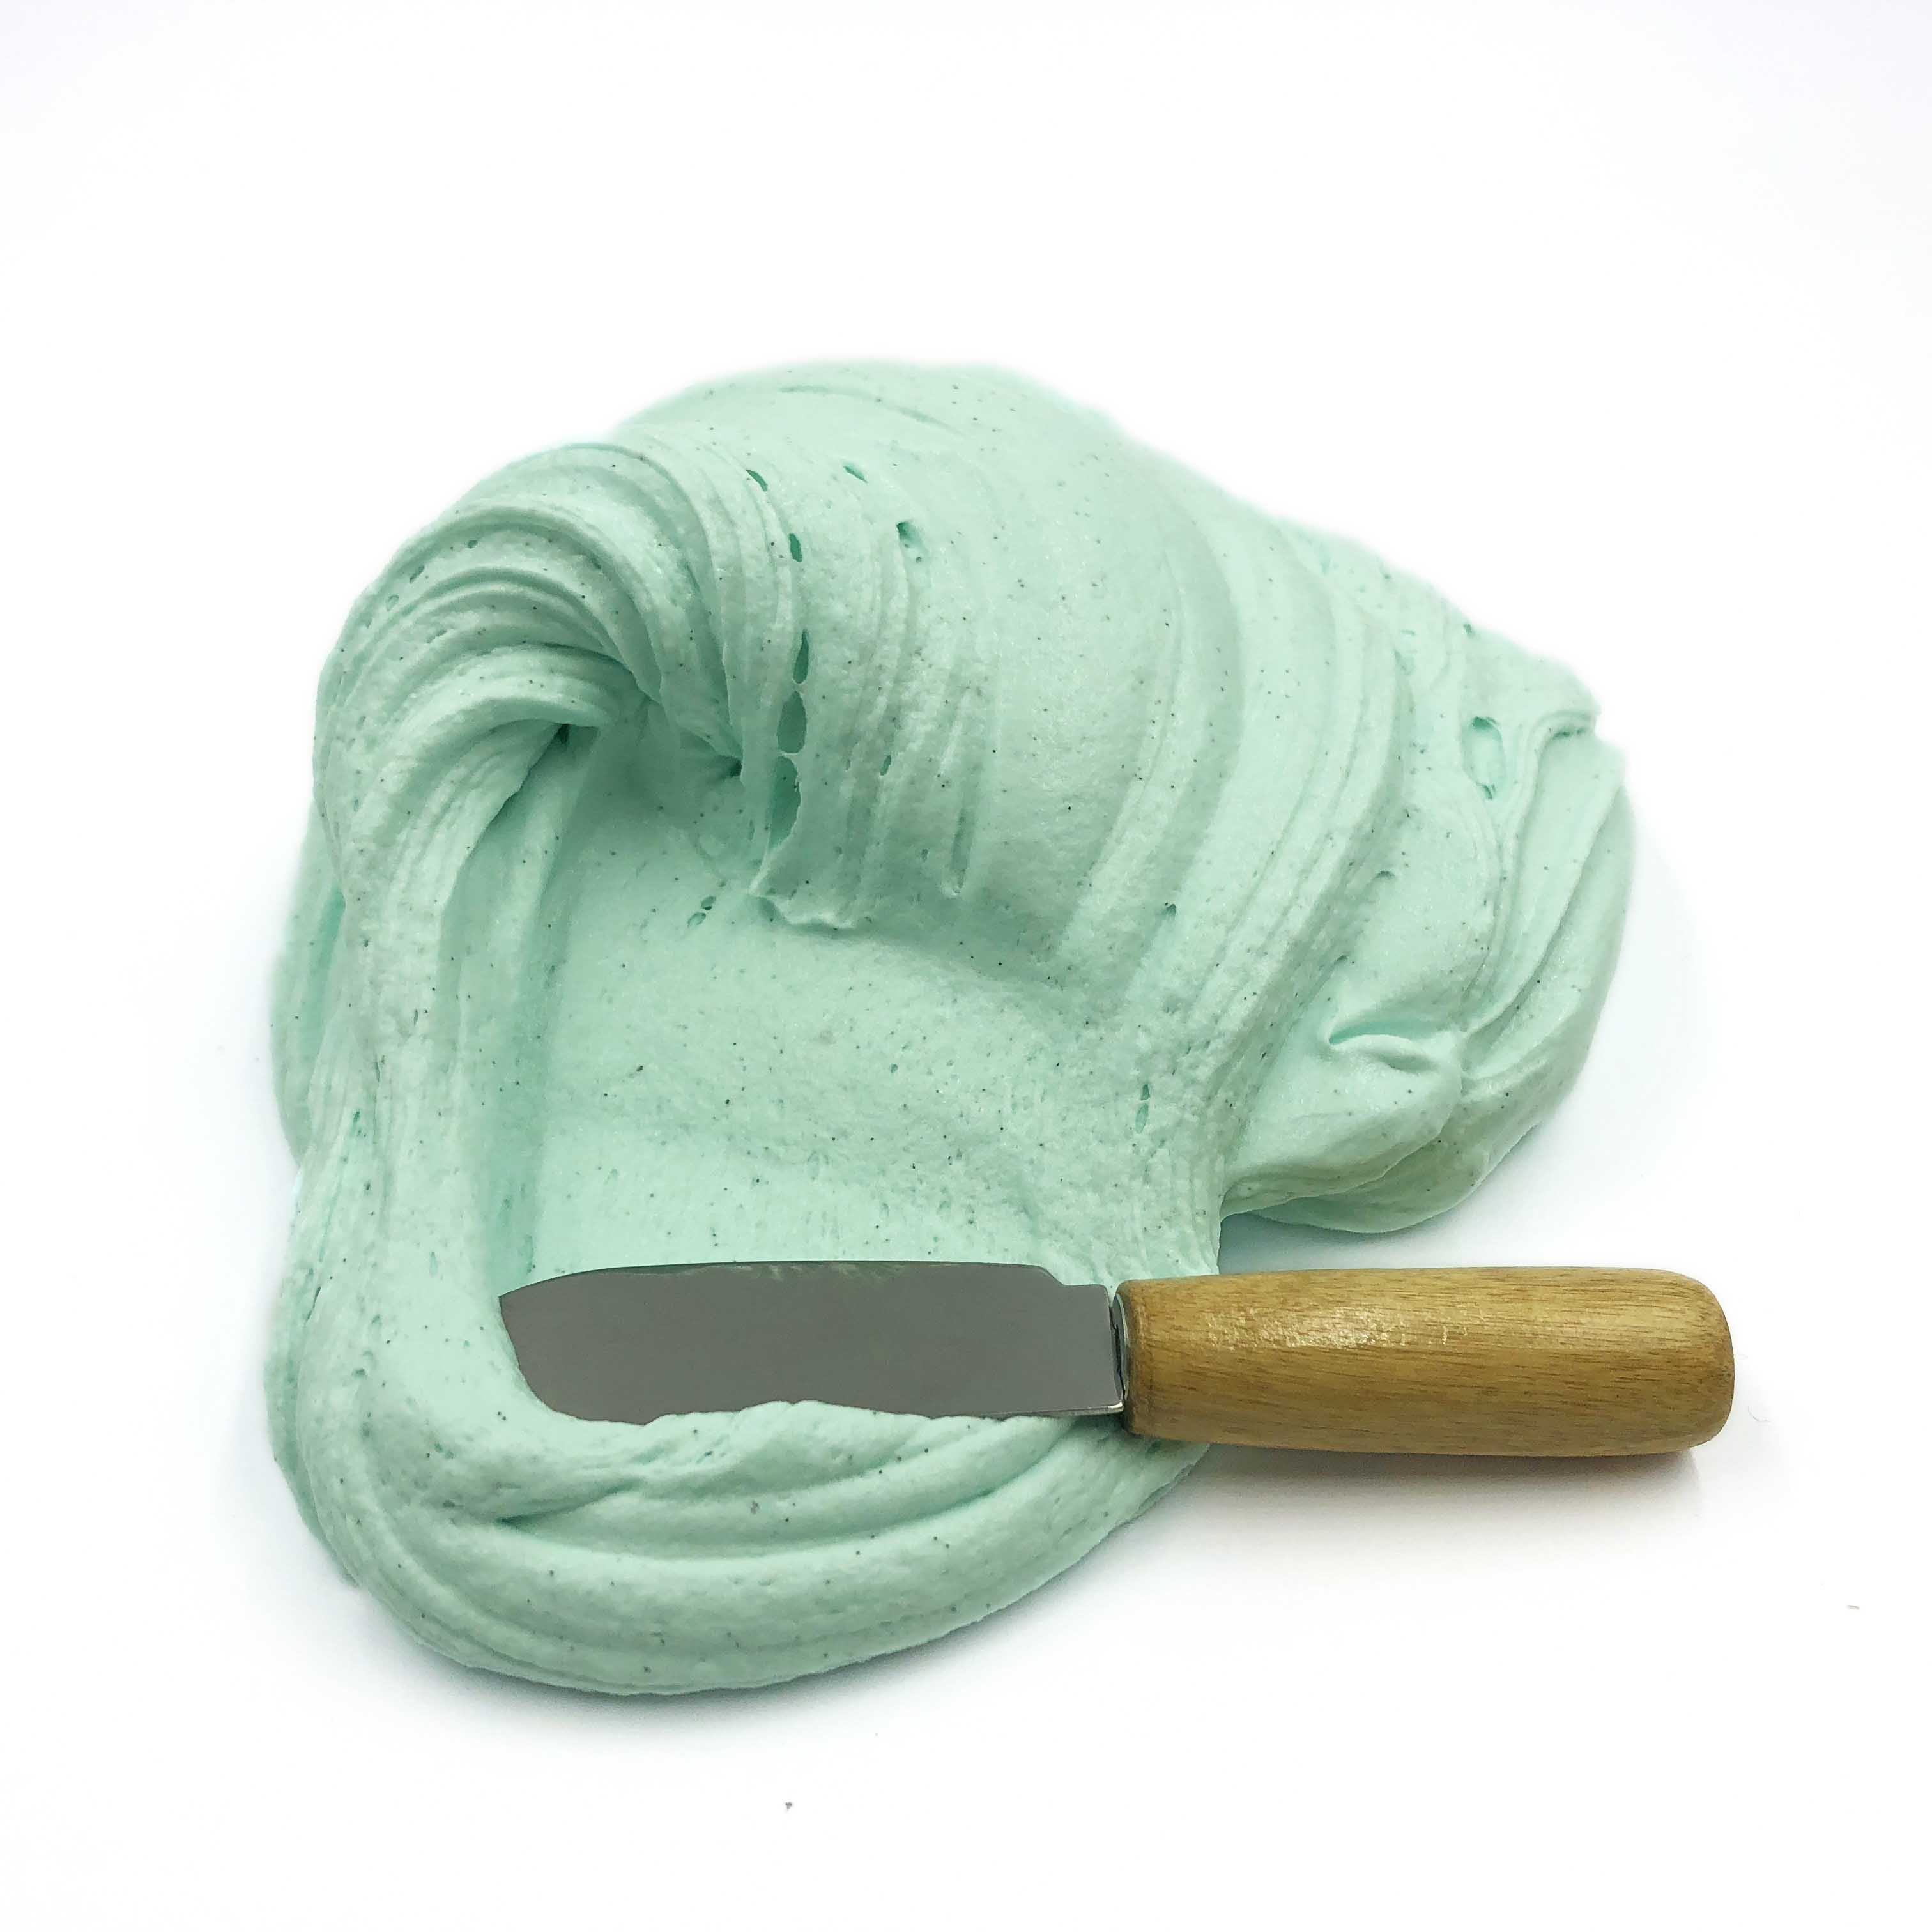 Mint Oreo Ice Cream Green Butter Slime Fantasies Spreading